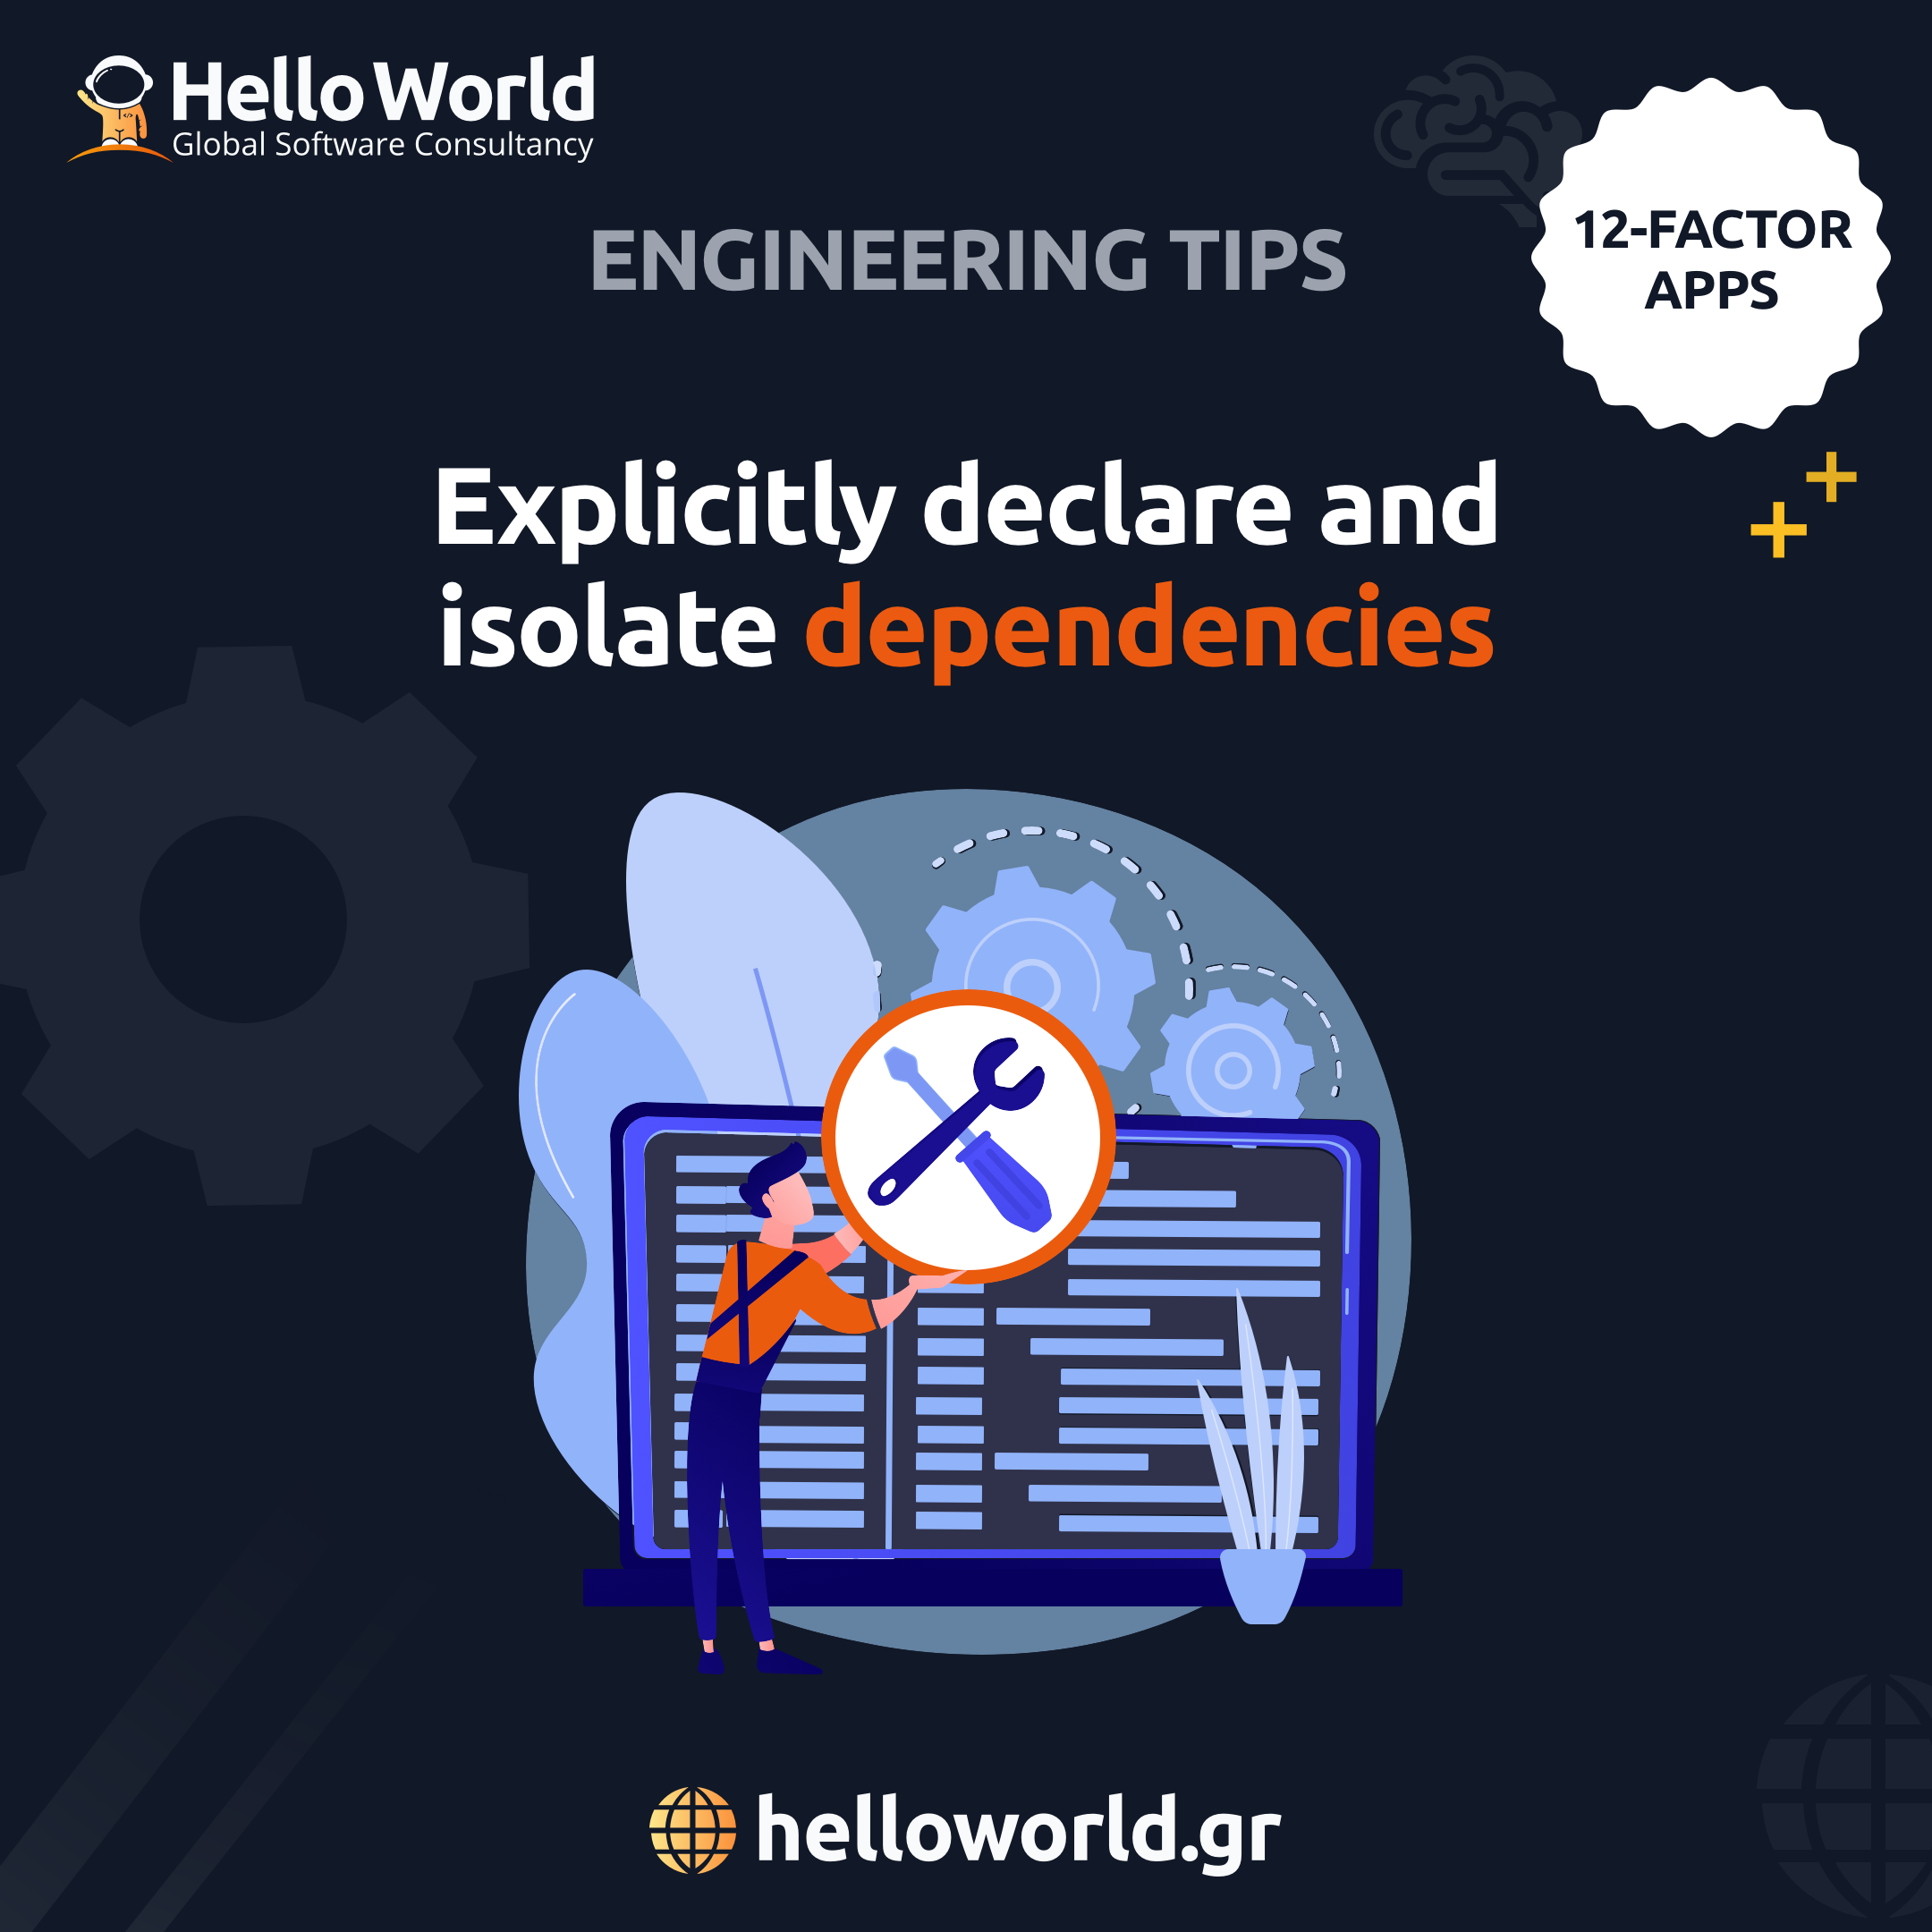 Dependencies: Explicitly declare and isolate dependencies